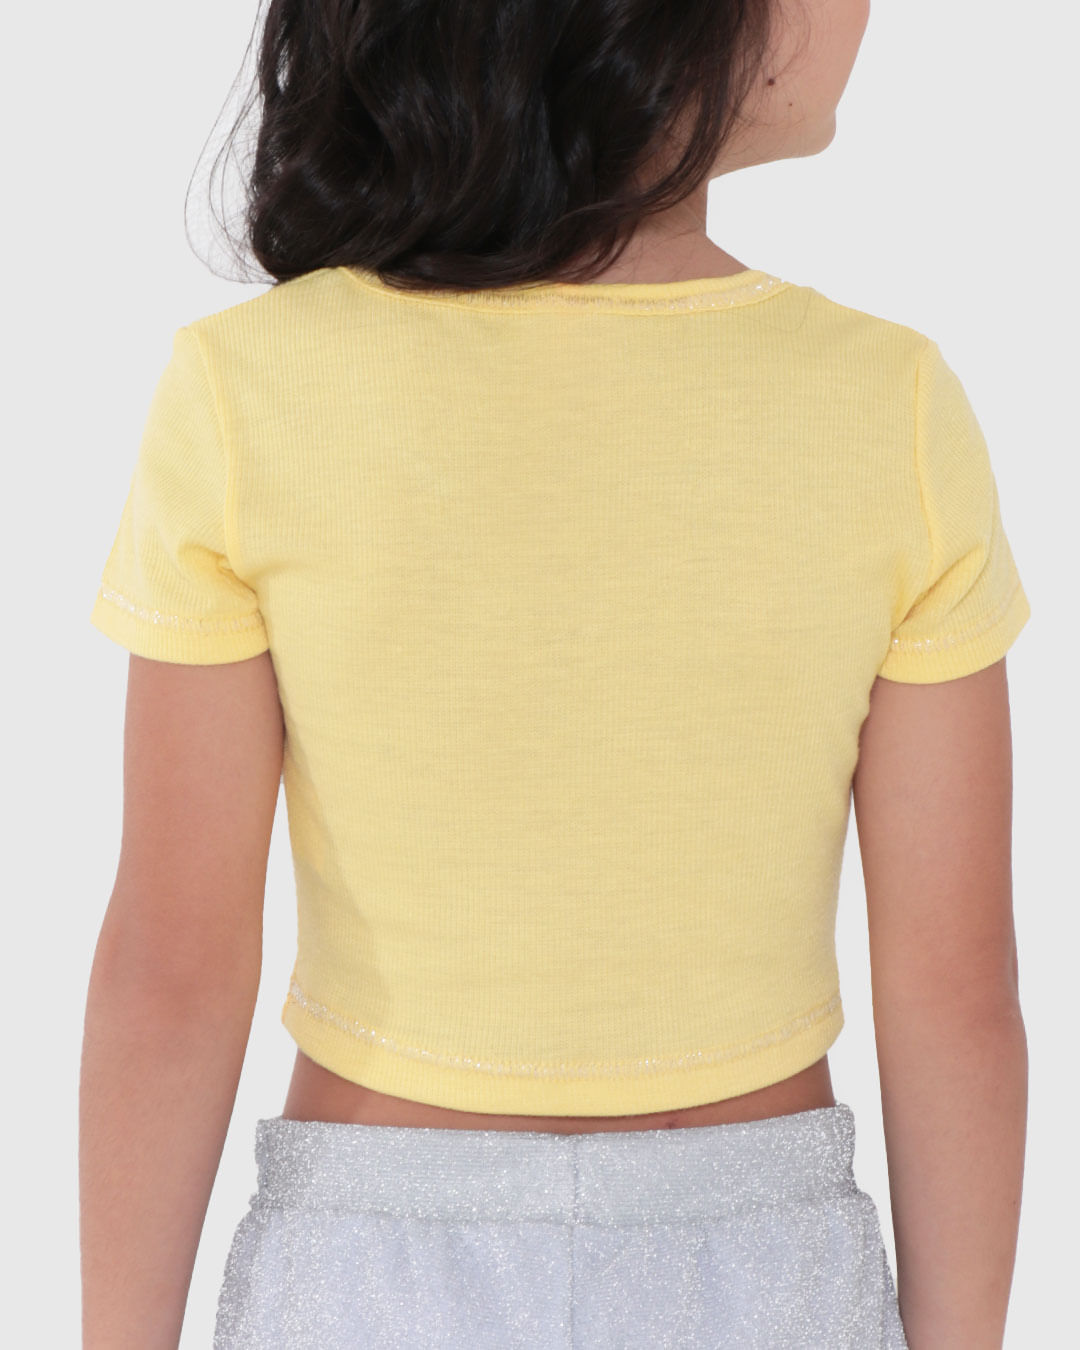 Blusas para meninas amarelas, cropped, junior (9-14 anos) - GLAMI